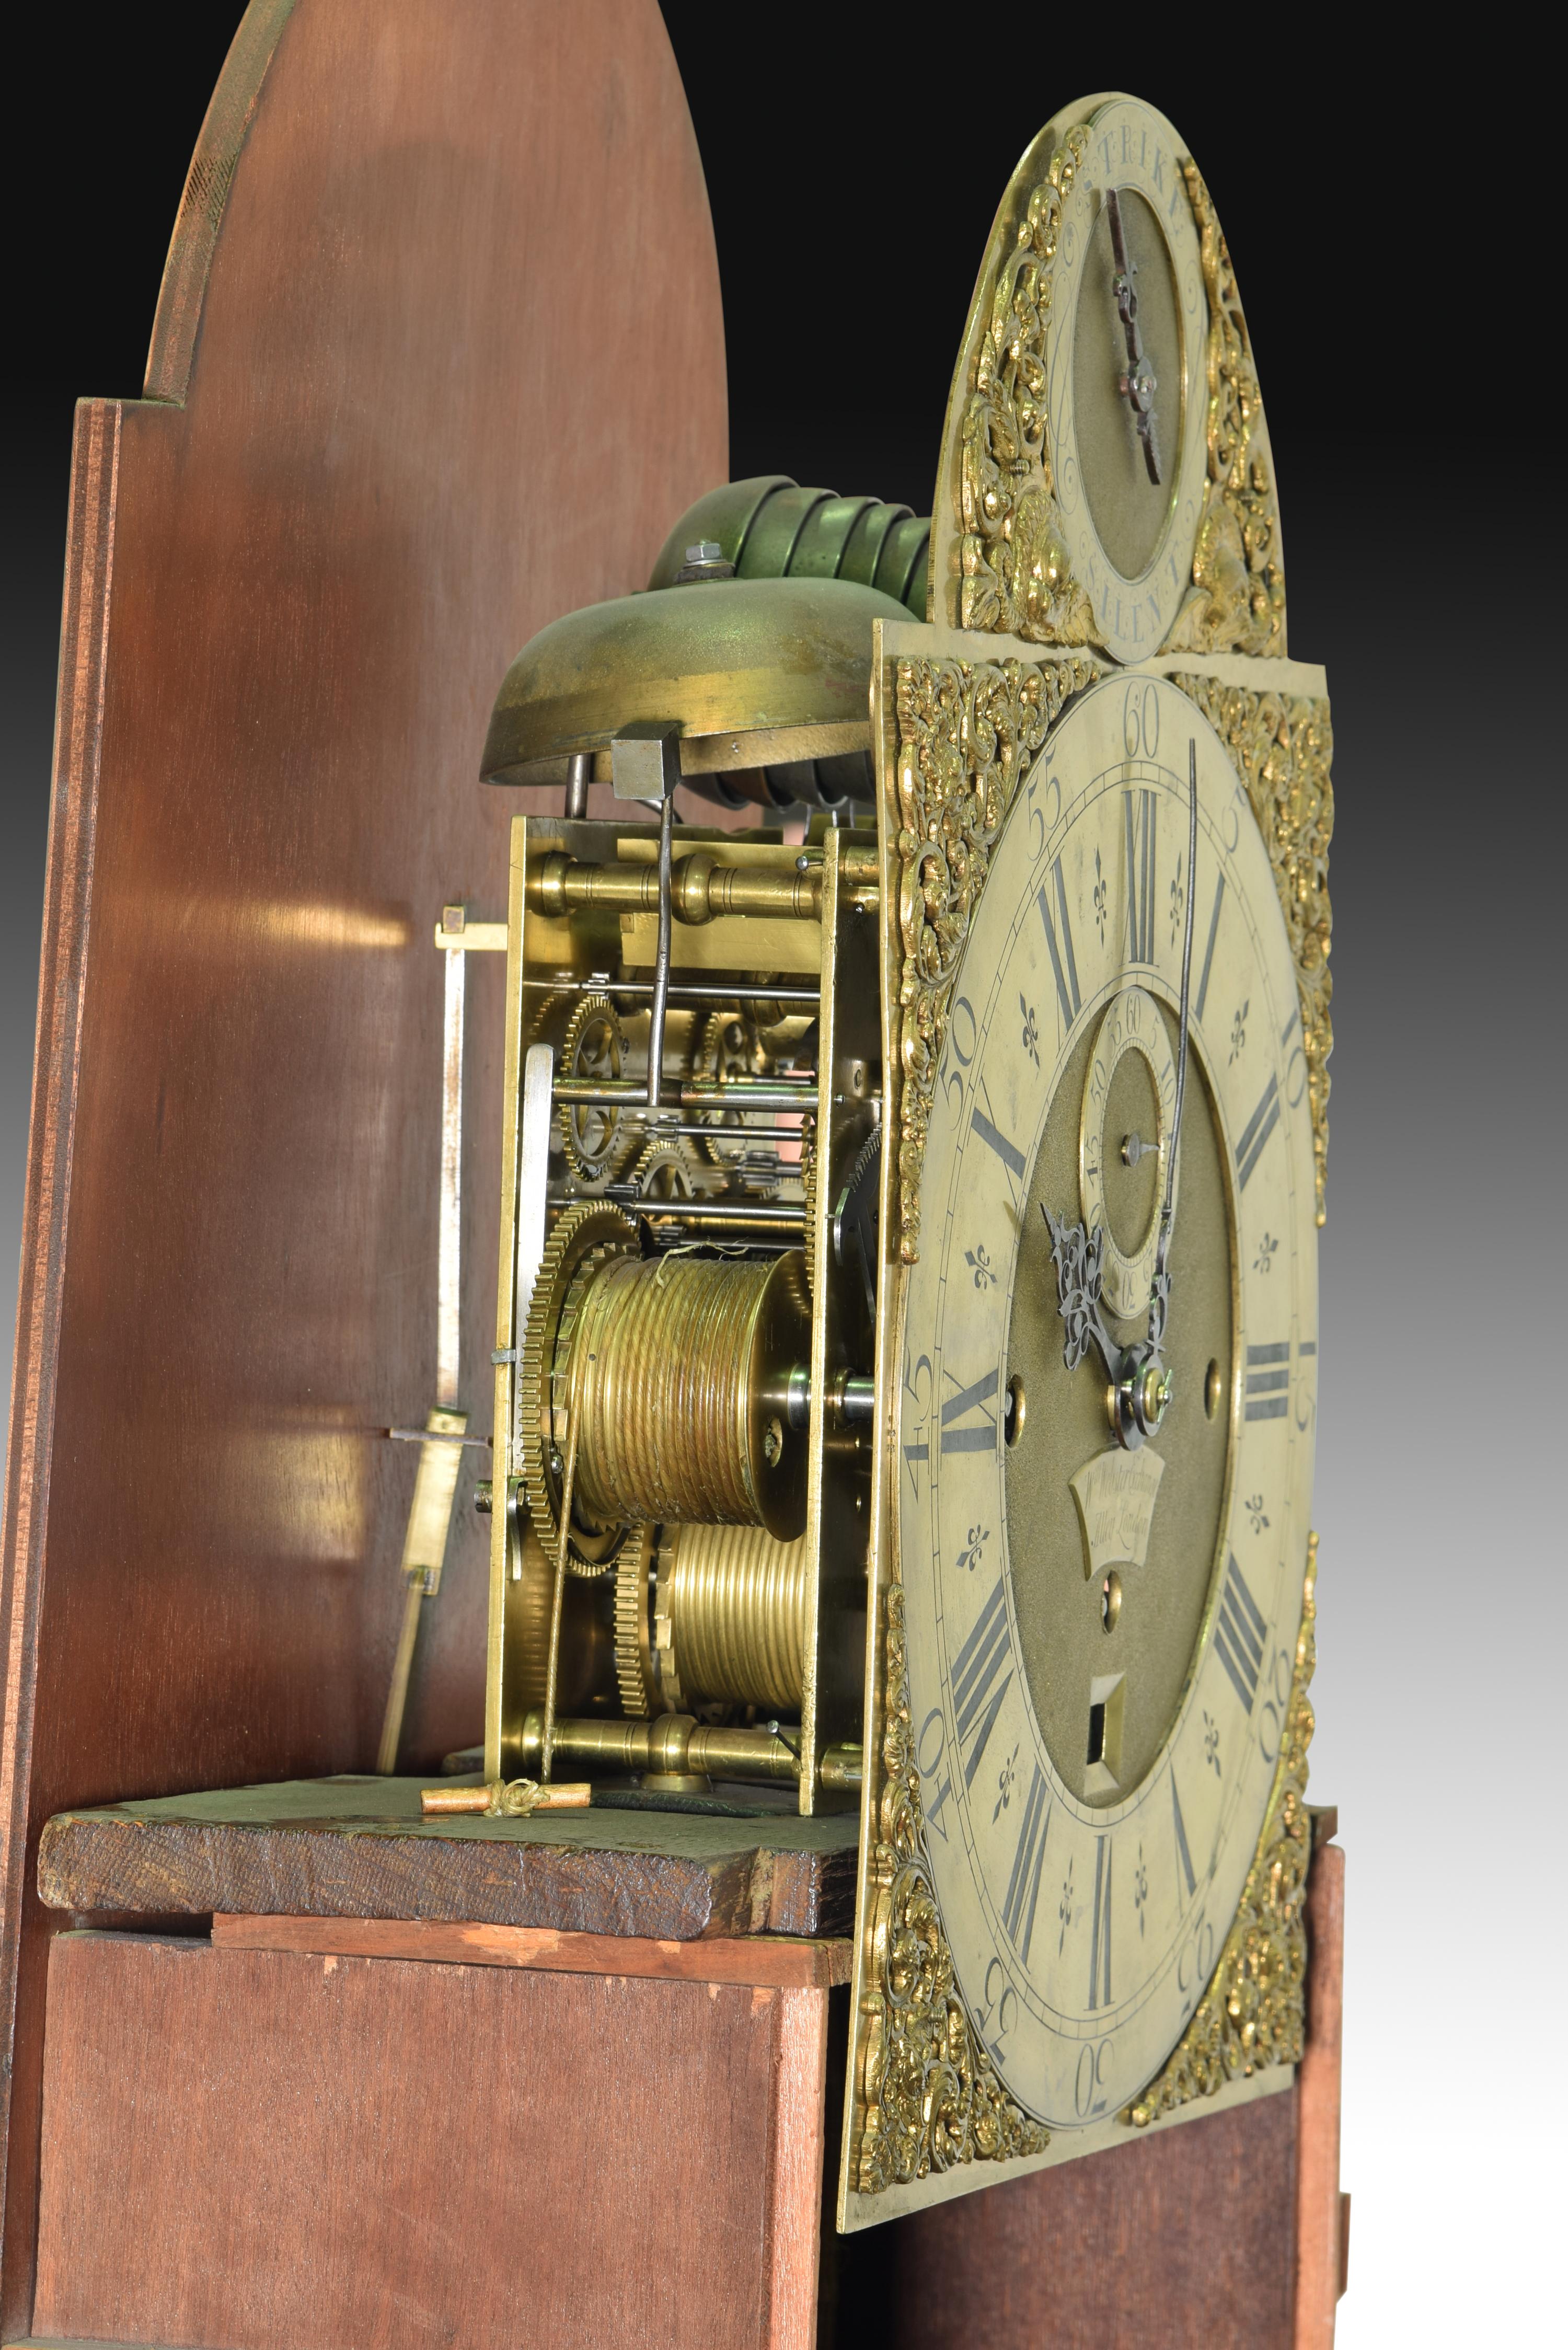 English Mahogany Grandfather clock, William Webster, London, England, 1711-1770.